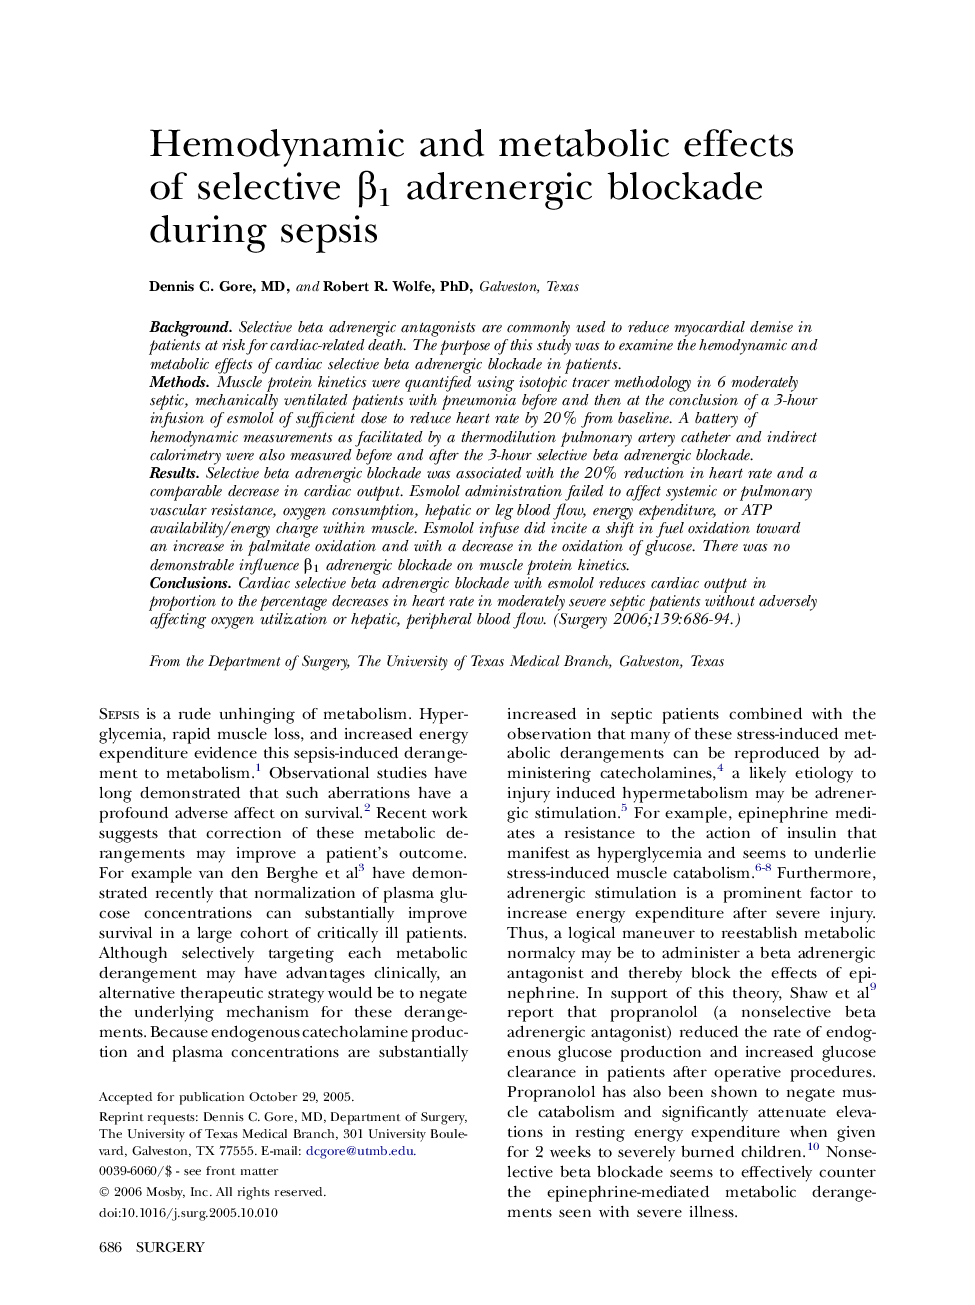 Hemodynamic and metabolic effects of selective β1 adrenergic blockade during sepsis